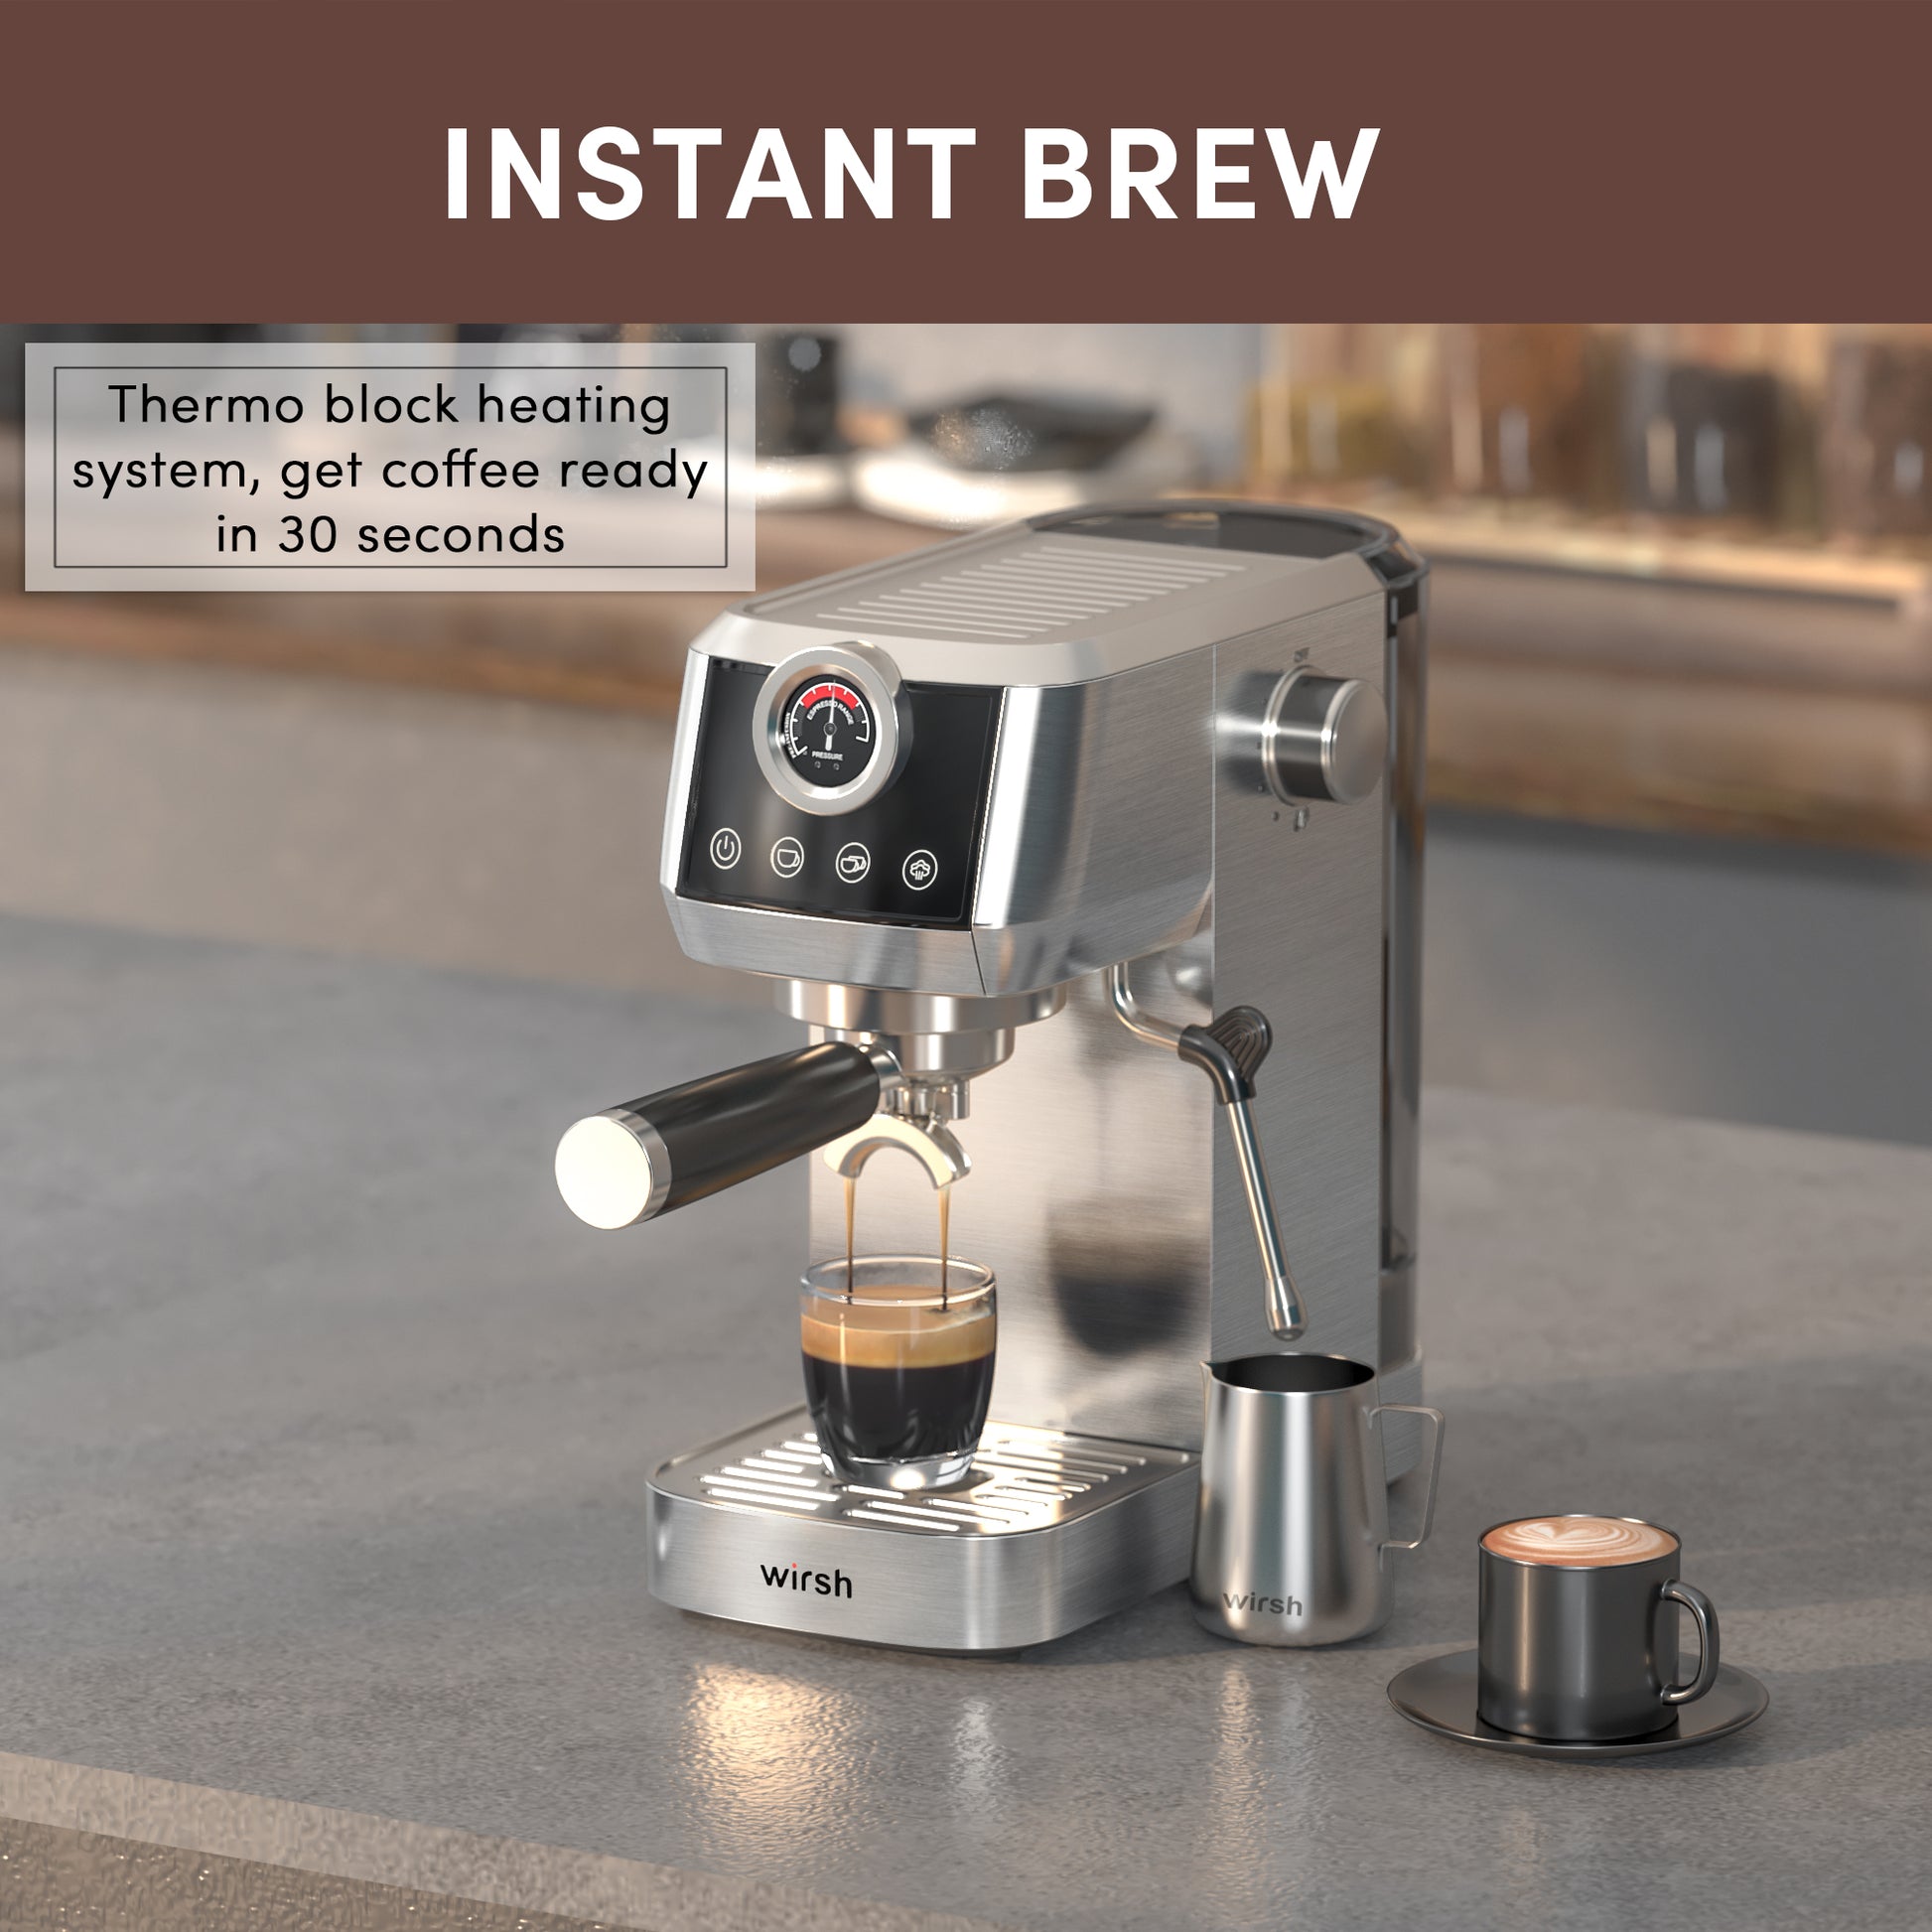 < img src="espresso machine.jpg" alt="wirsh 20bar espresso machine instant brew"/>